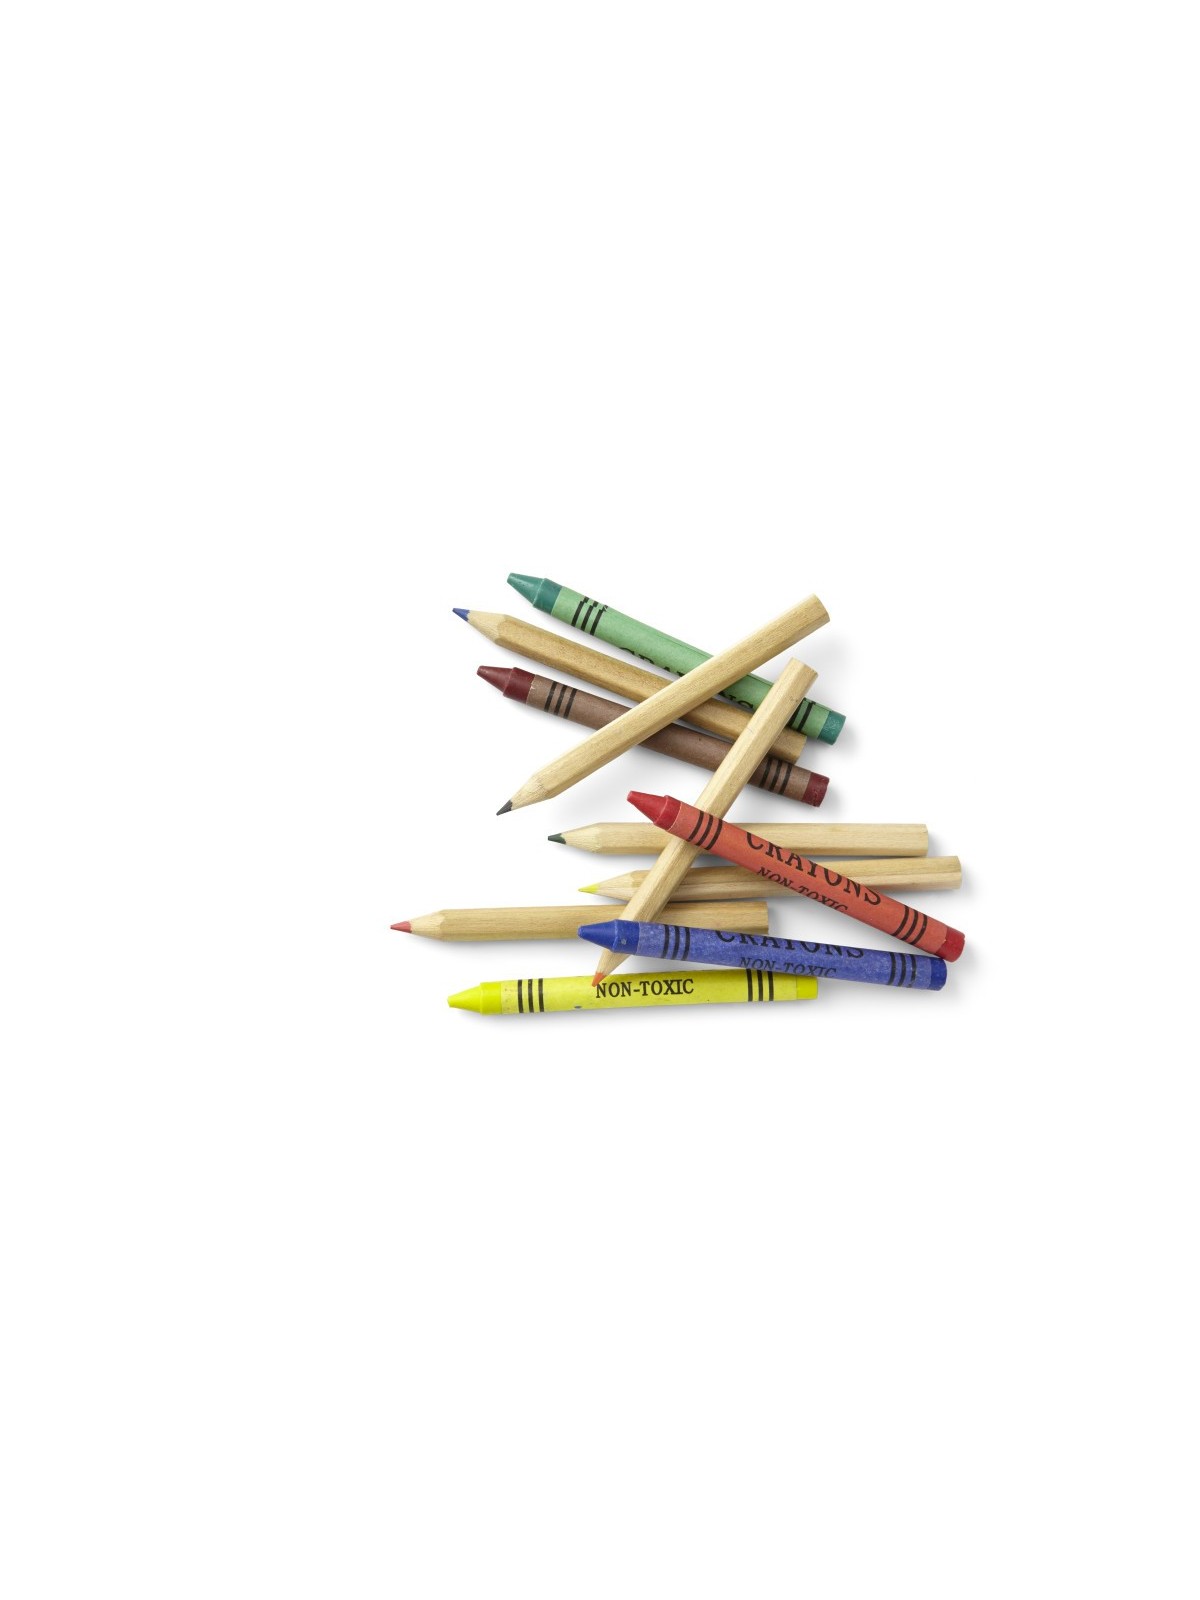 30-587 Boite de crayons gras personnalisé